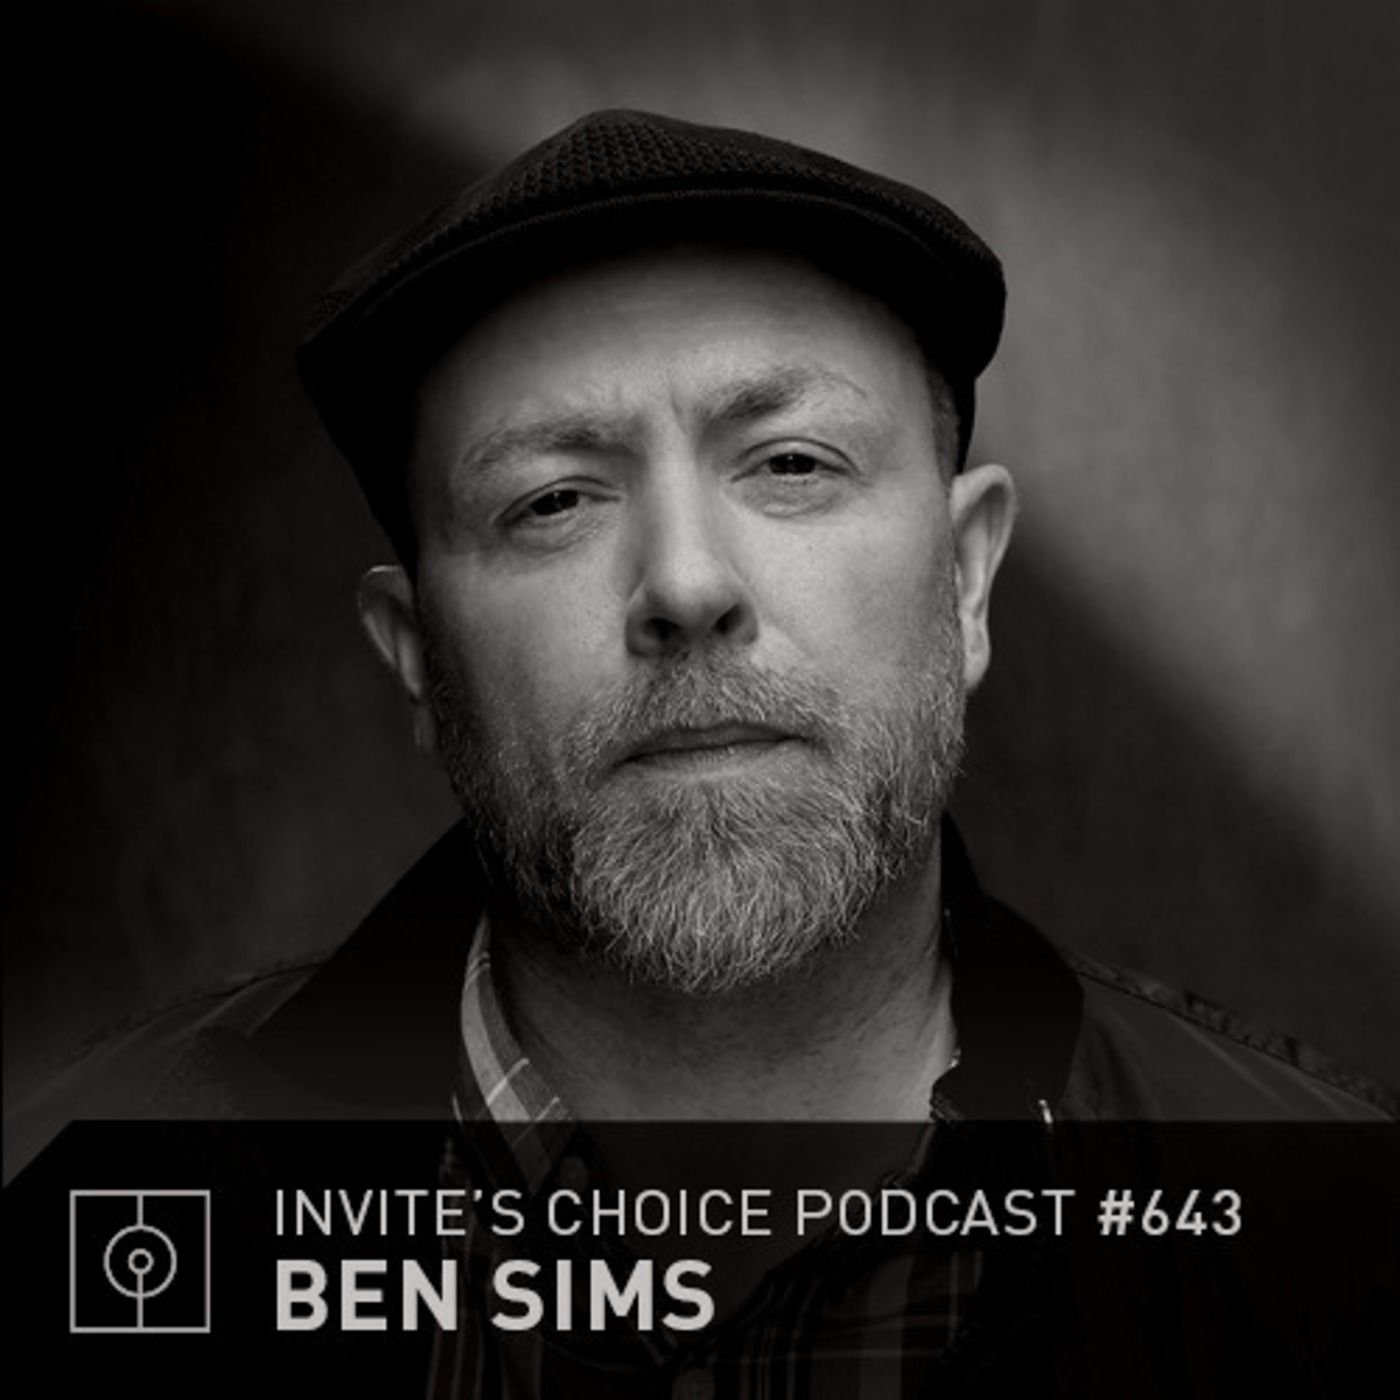 Ben Sims 2021 Invite's Choice Podcast 643